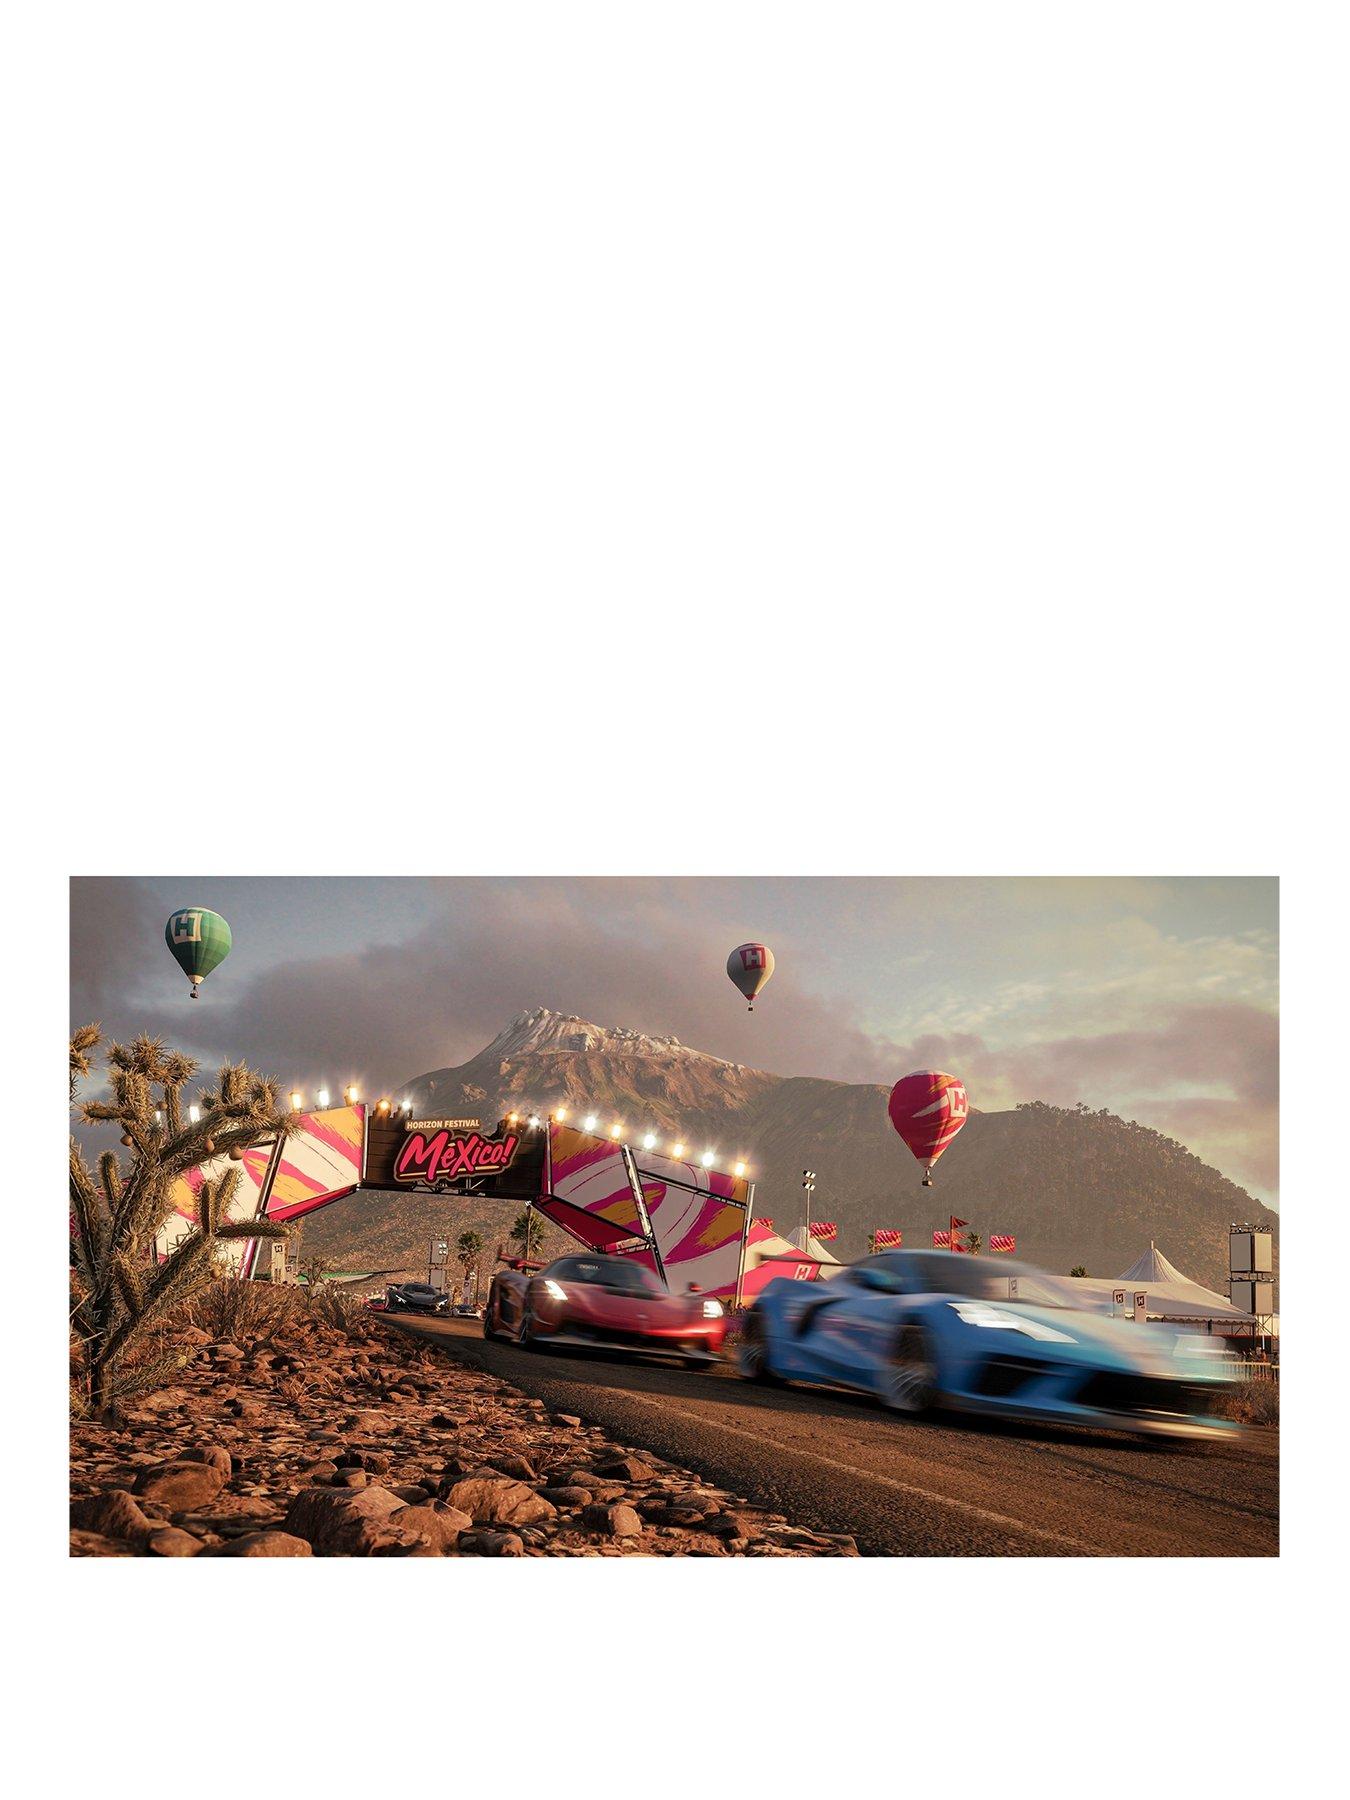  Forza Horizon 5: Xbox Standard Edition - For Xbox